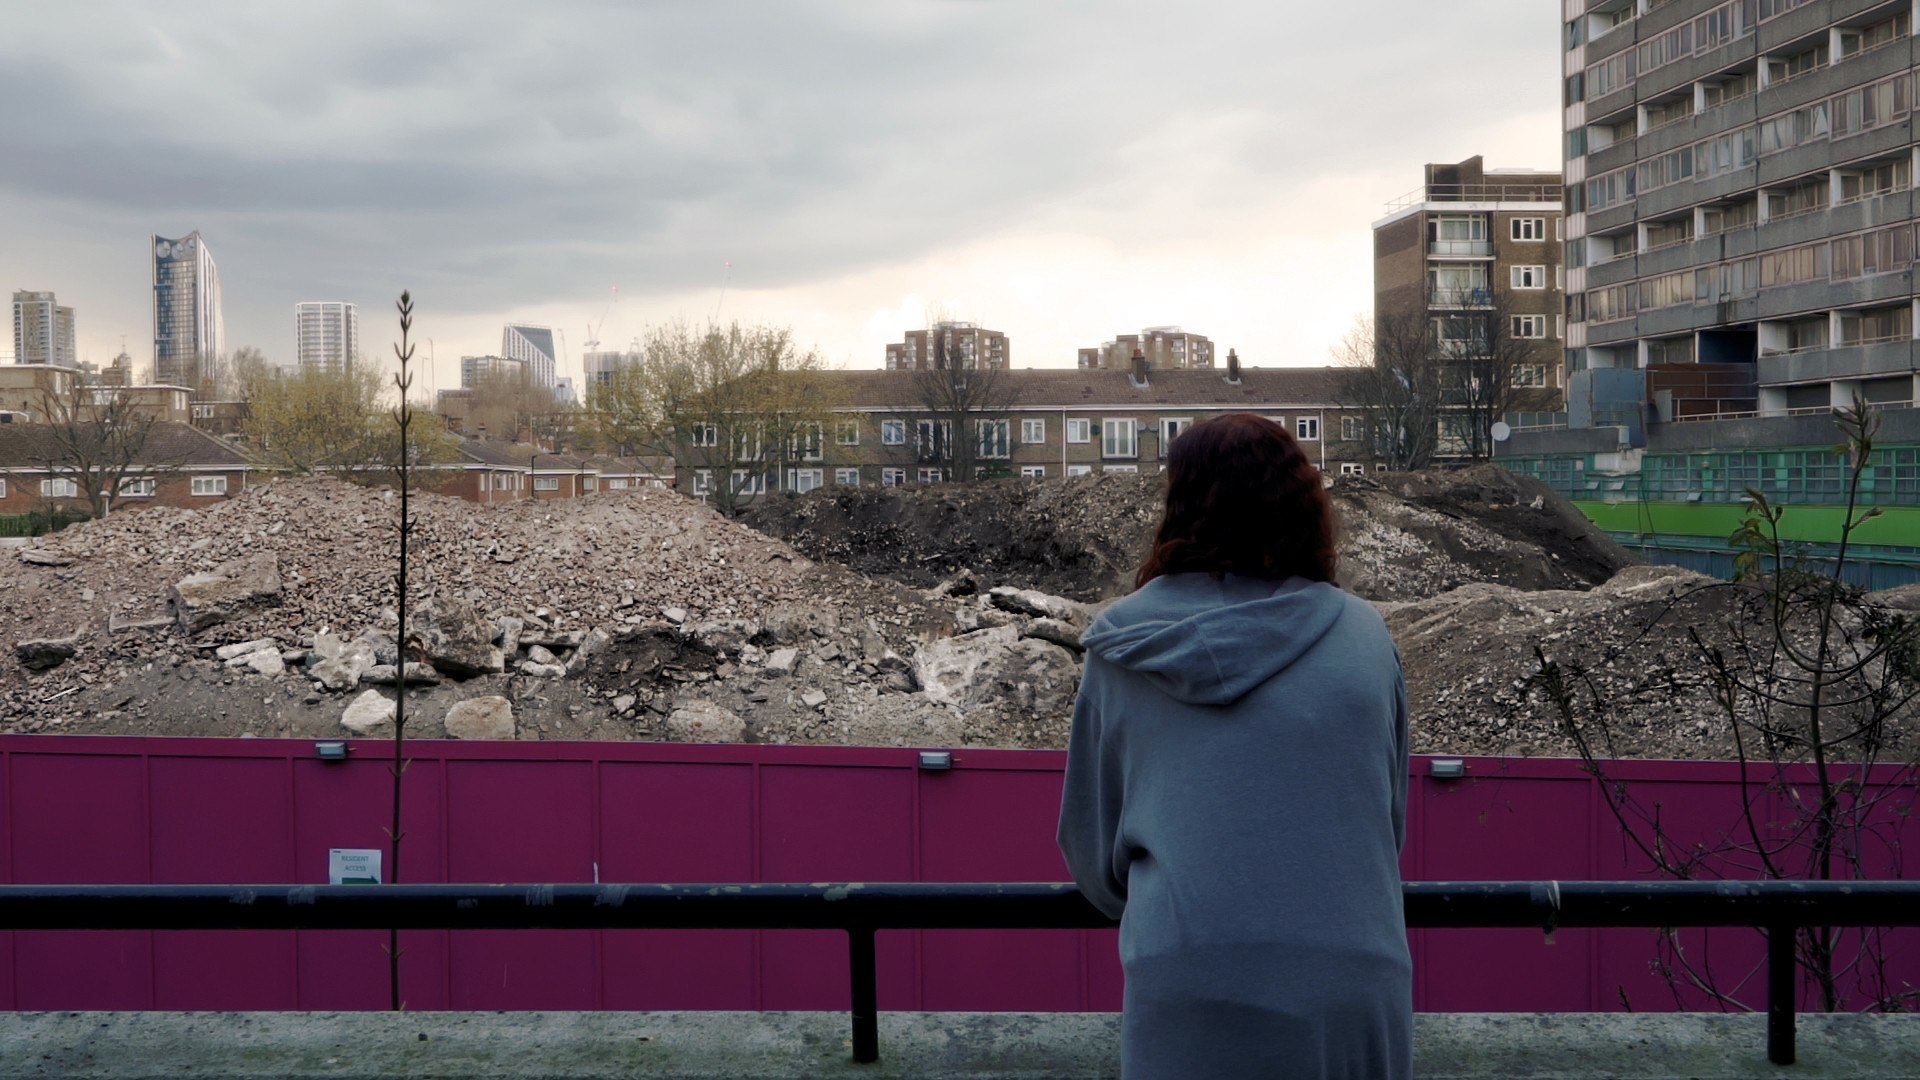 Fotogramma tratto dal film Aylesbury Estate (2020).